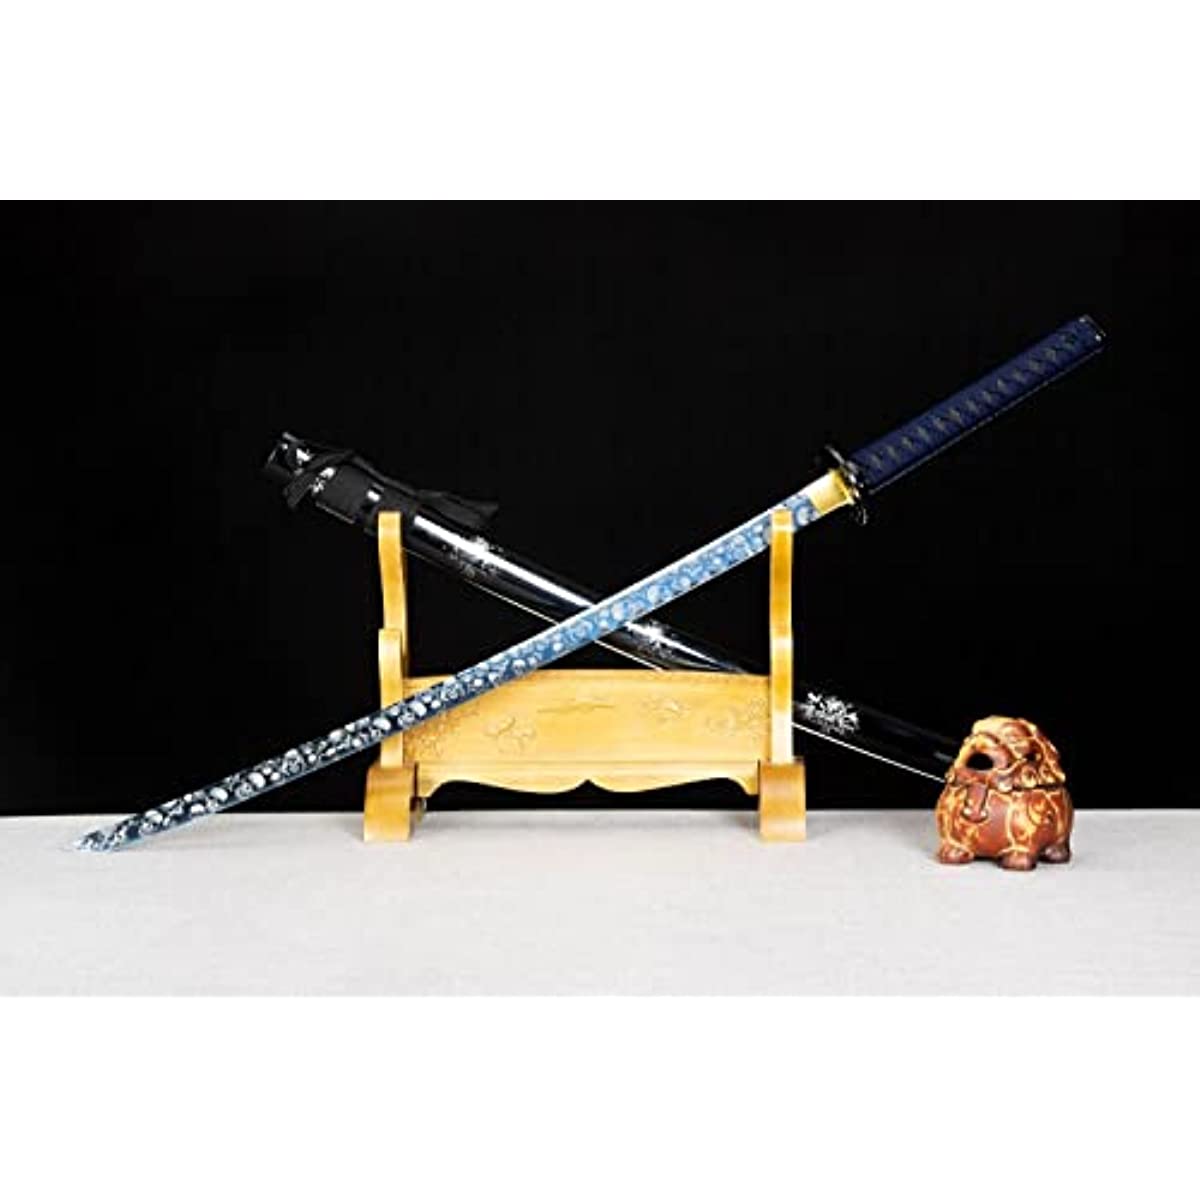 Sword samrui Real,Full Tang,Hand Forged High Manganese Steel Blades,LOONGSWORD